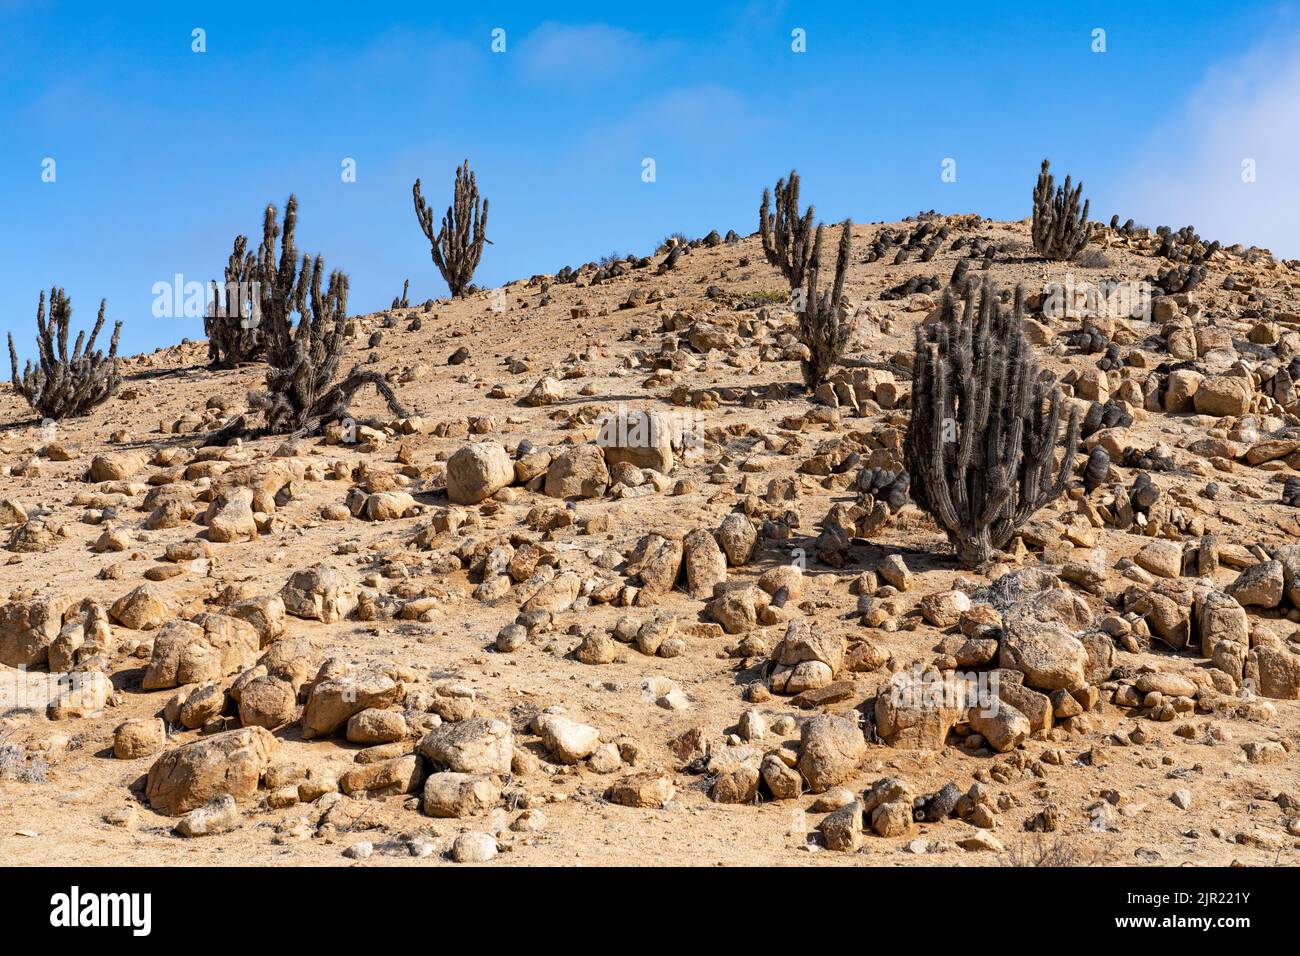 A forest of Eulychnia iquiquensis candelabra cacti in Pan de Azucar National Park in the Atacama Desert of Chile. Stock Photo